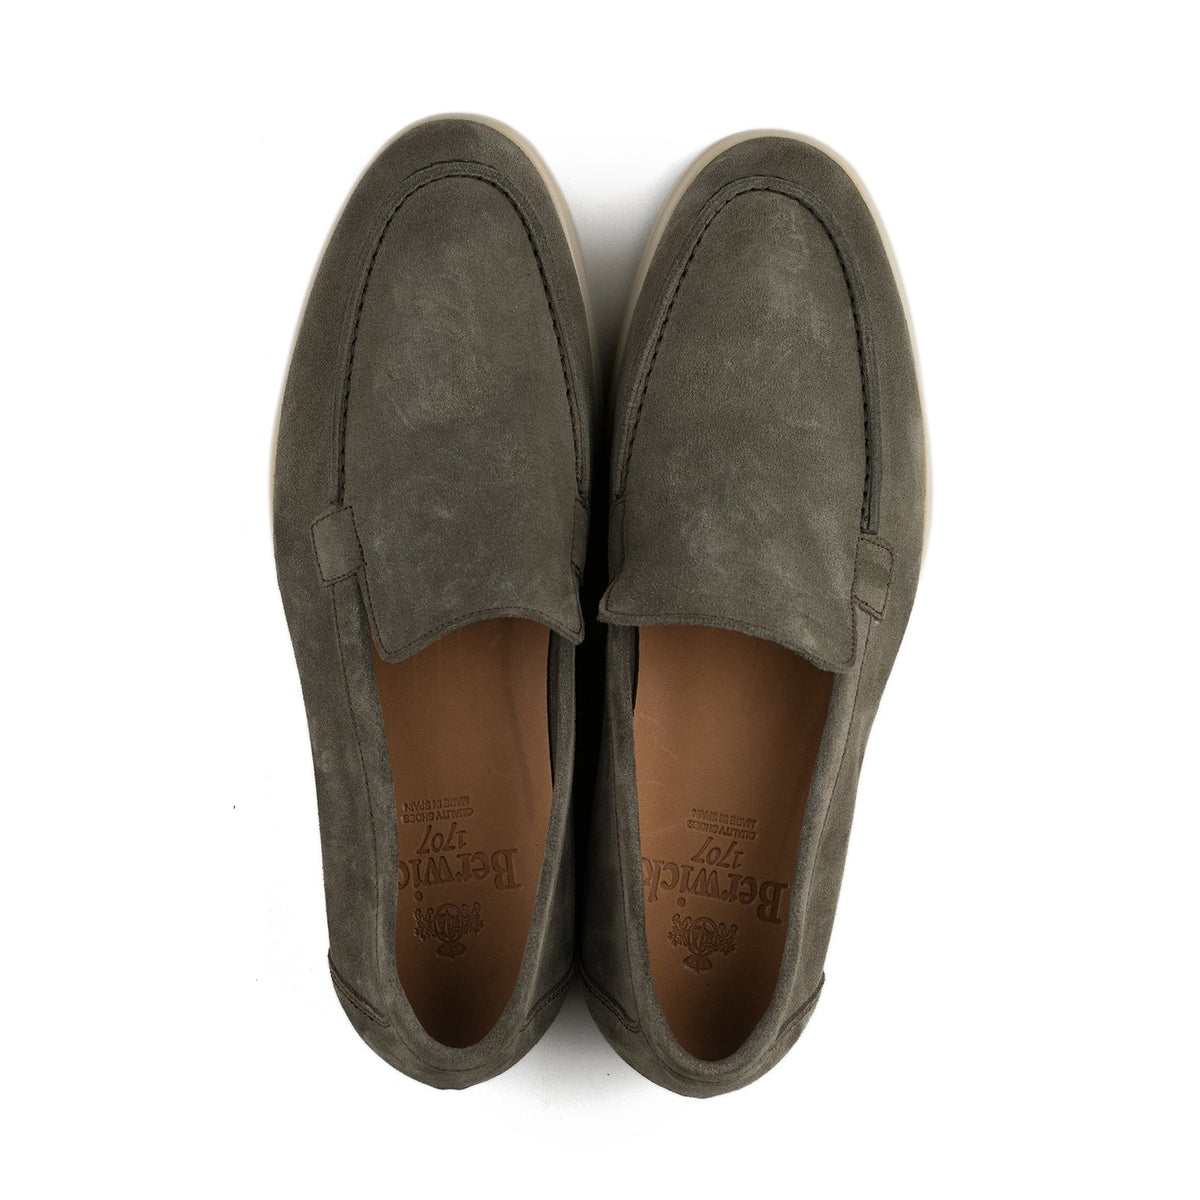 Rainy Day? Wear Suede - The Shoe Snob